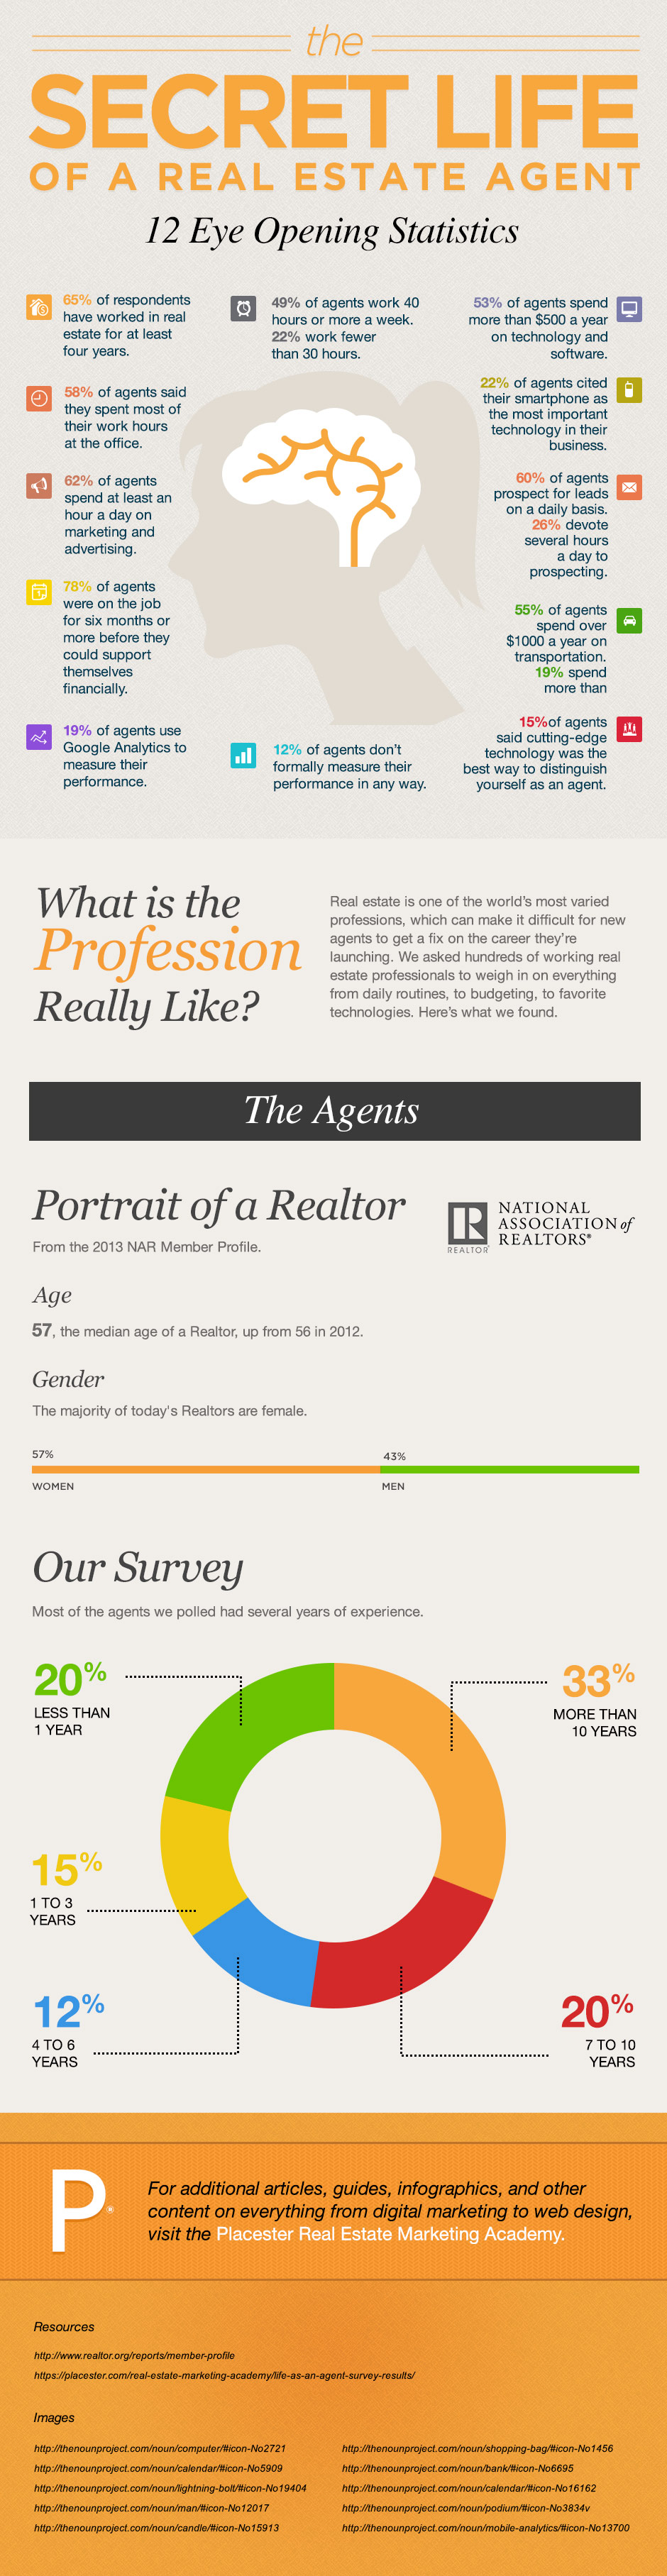 Secret Life of a Real Estate Agent